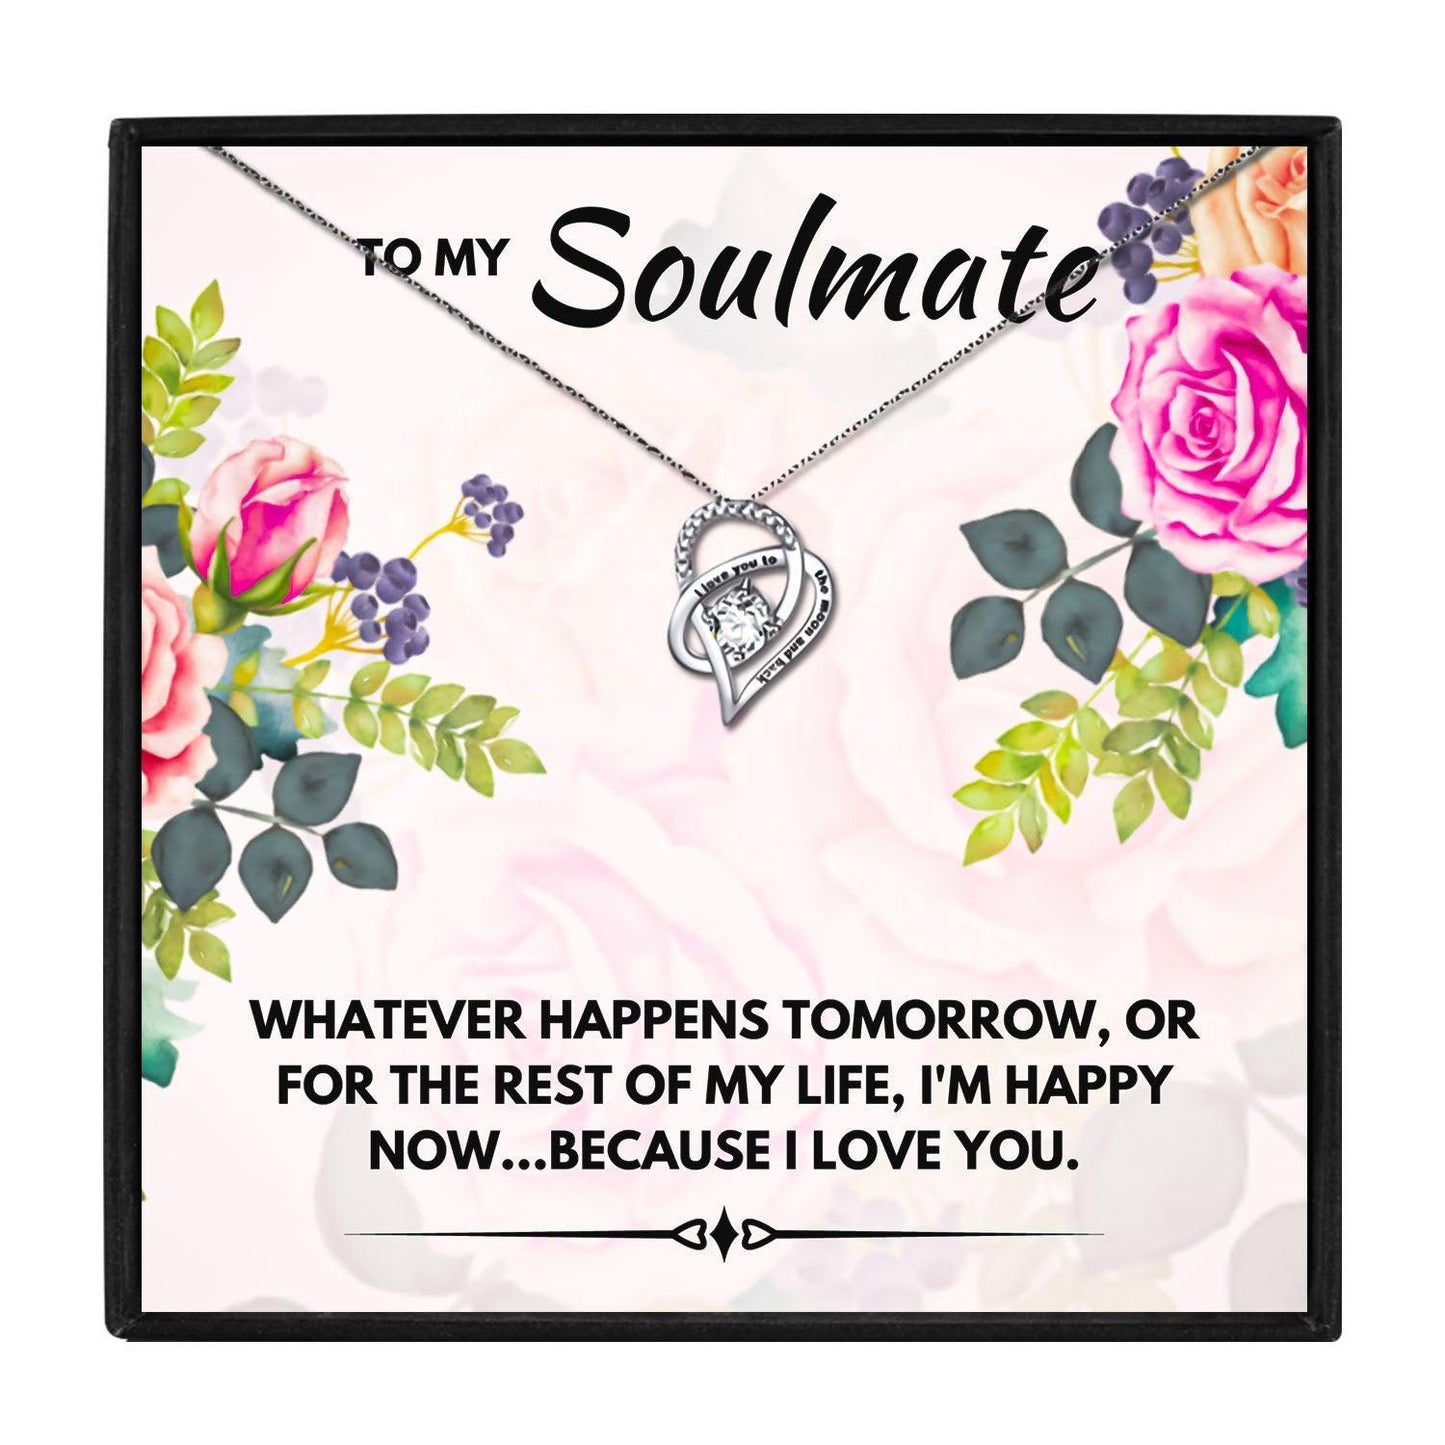 Smokin' Hot Soulmate Necklace in 2023 | Smokin' Hot Soulmate Necklace - undefined | Meaningful Soulmate gift, soulmate gift ideas, soulmate necklace, to my soulmate necklace | From Hunny Life | hunnylife.com